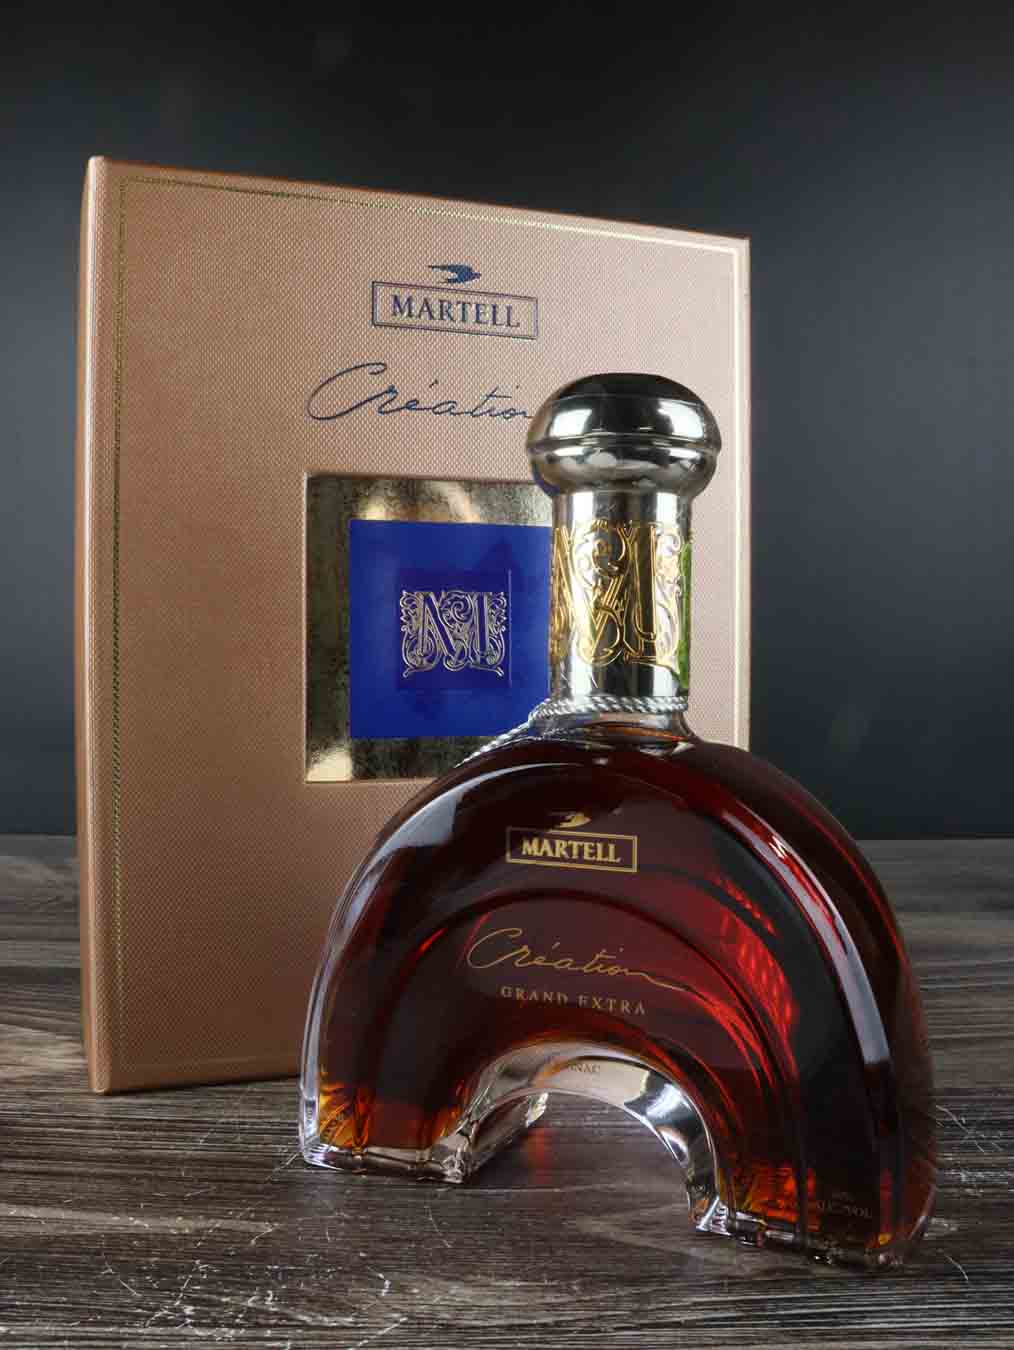 Martell 'Creation' Grand Extra Cognac | Unicorn Auctions